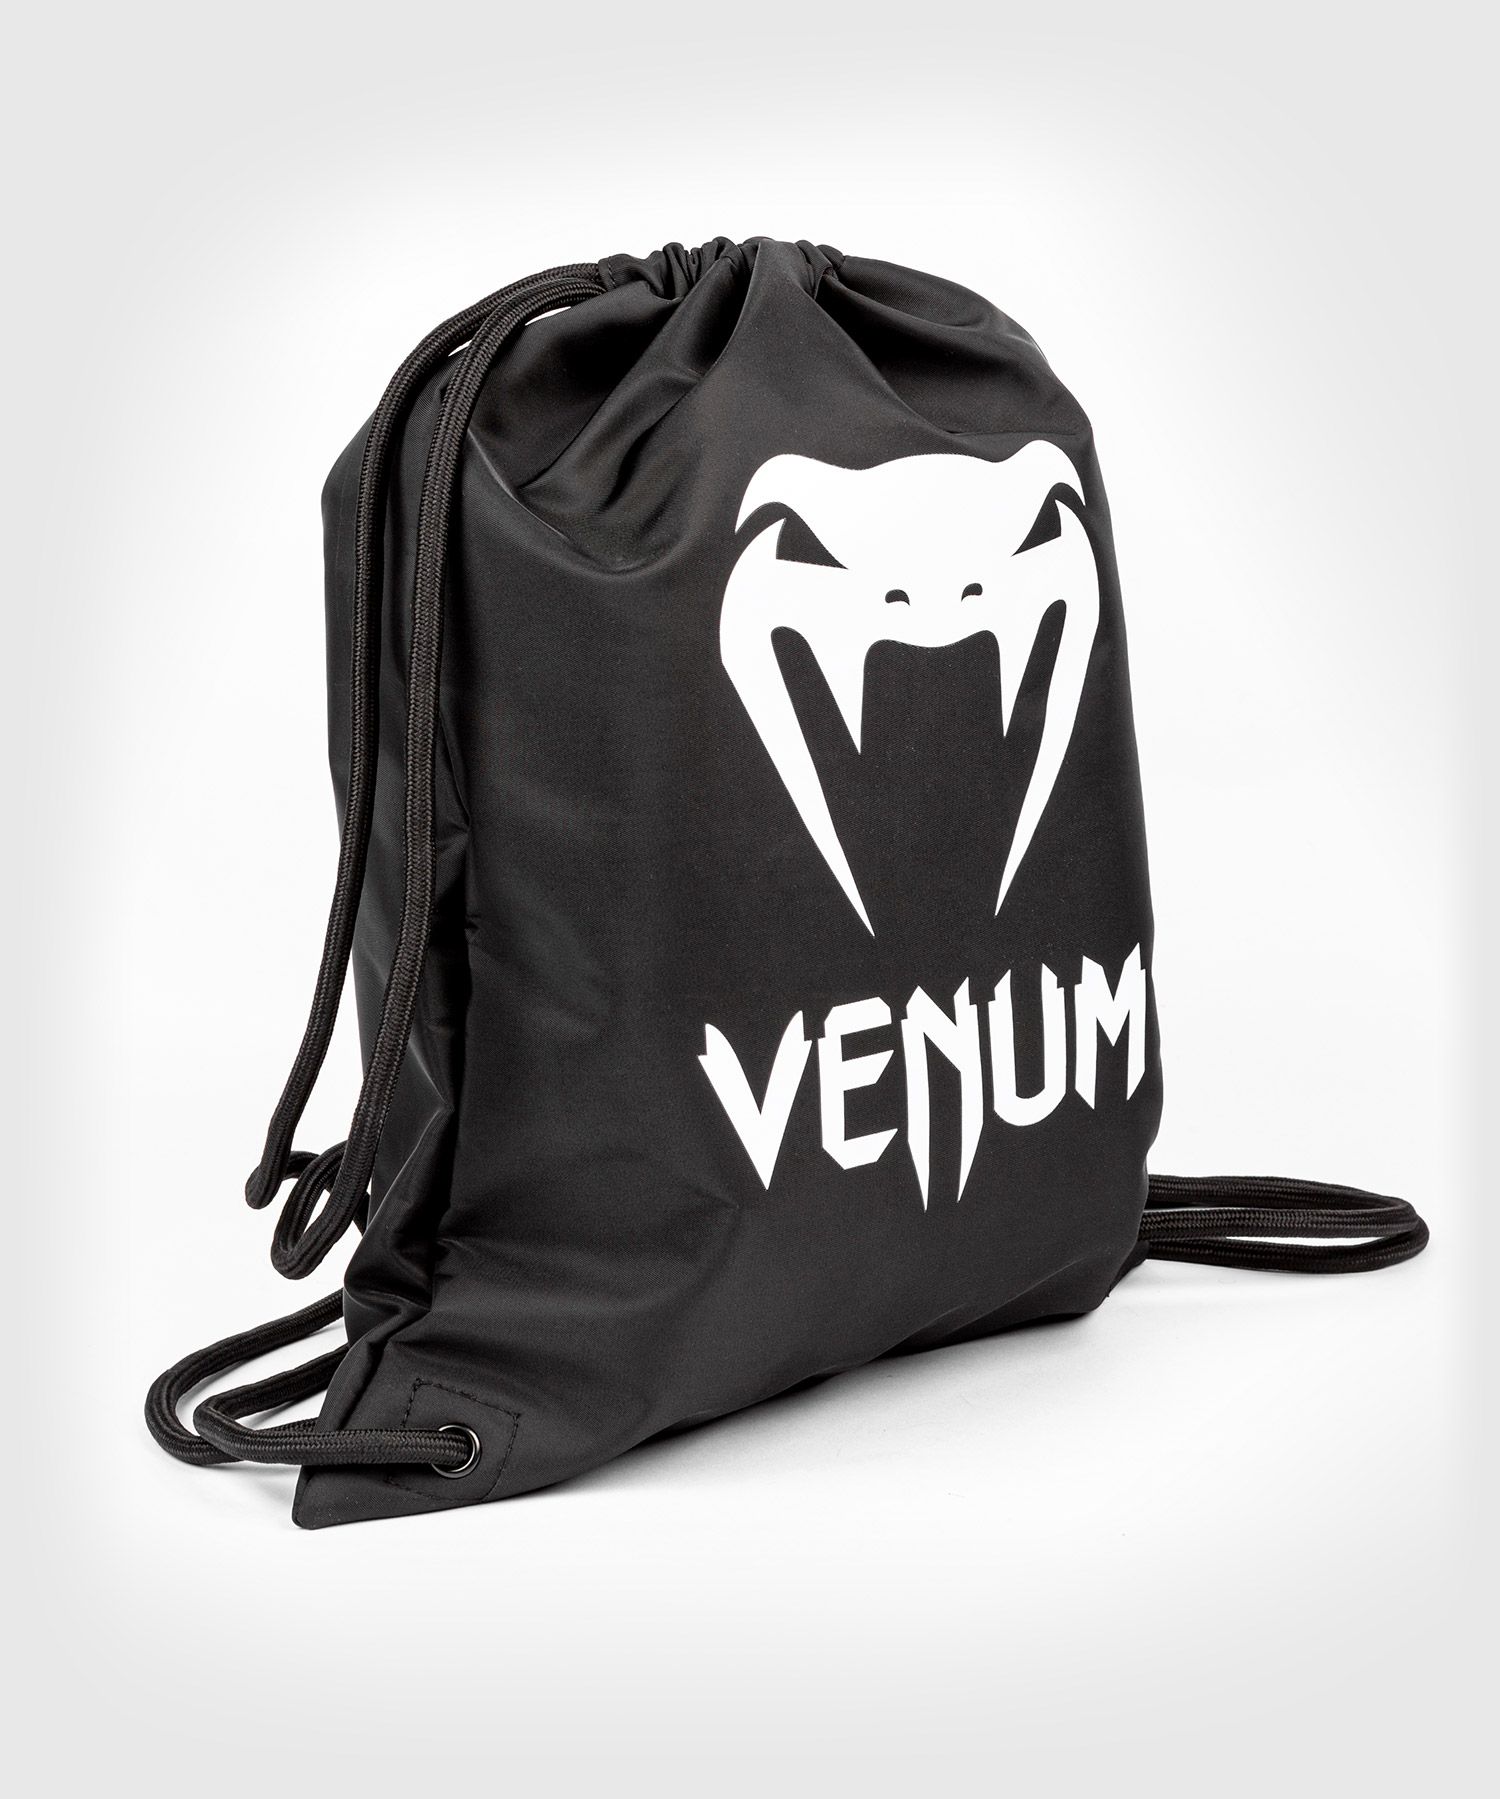 Venum Classic Drawstring バッグ - ブラック/ホワイト